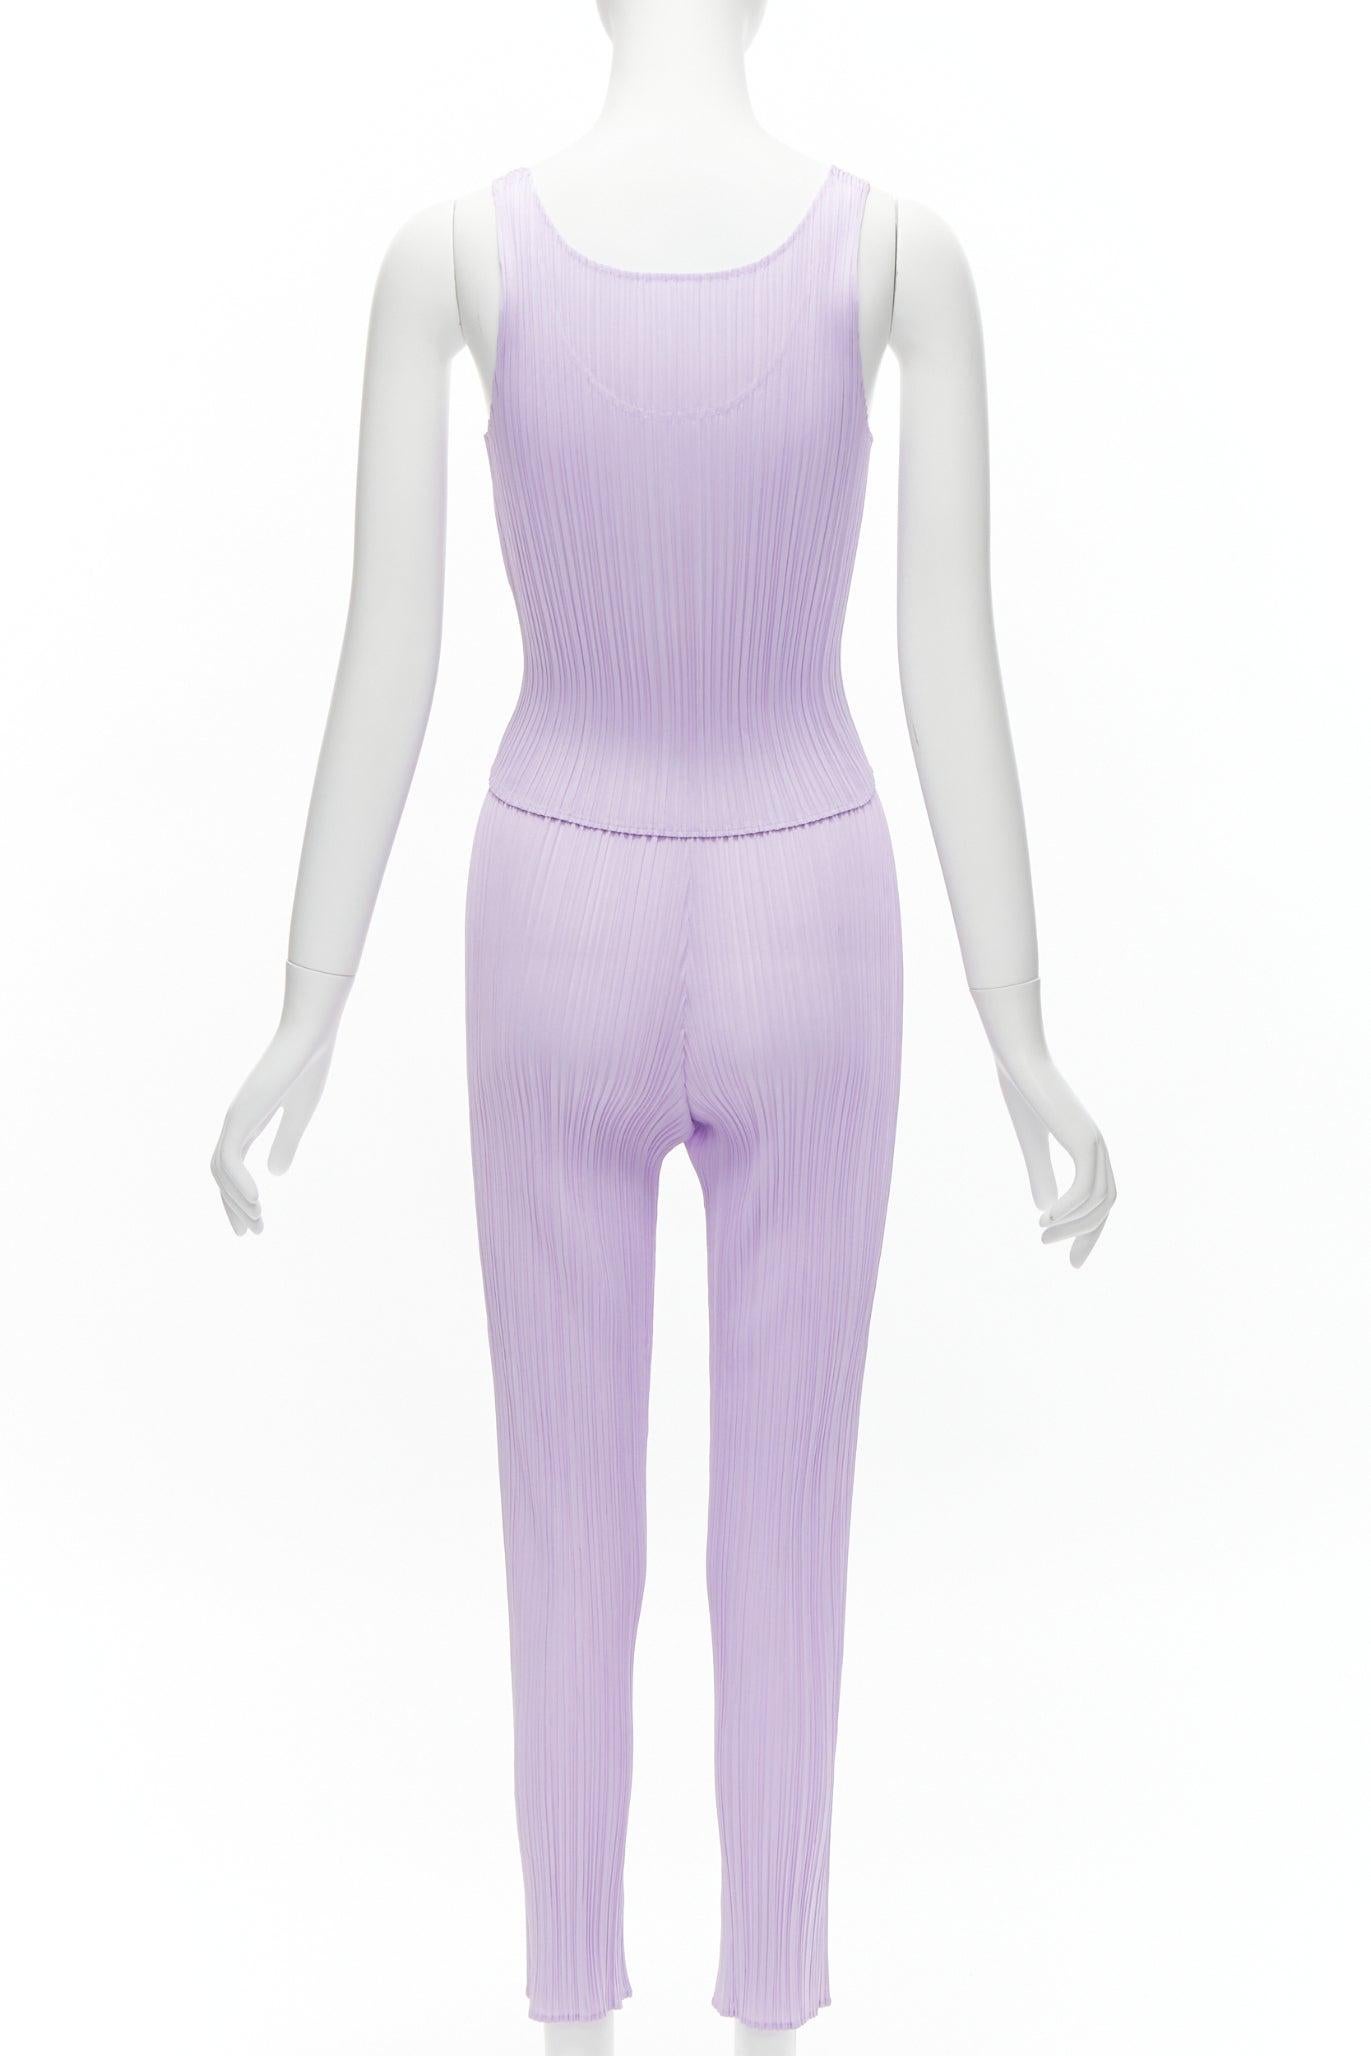 Women's ISSEY MIYAKE Pleats Please lilac purple plisse tank top slim pants set F